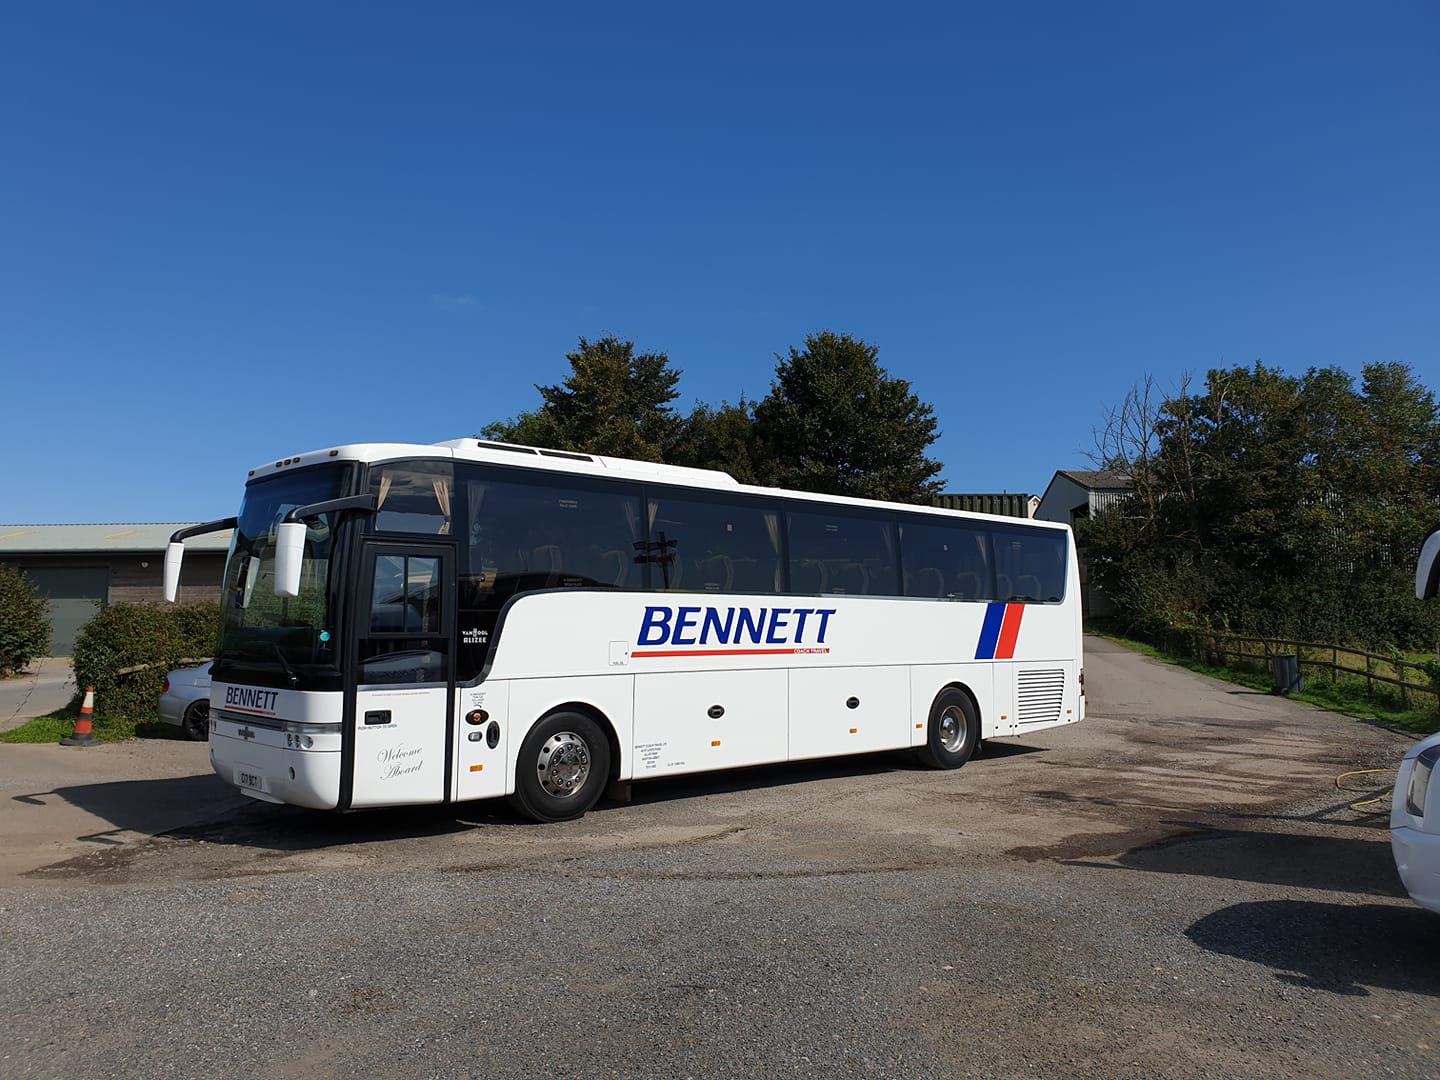 ‘Devastated’ – Bennett Coach Travel closes